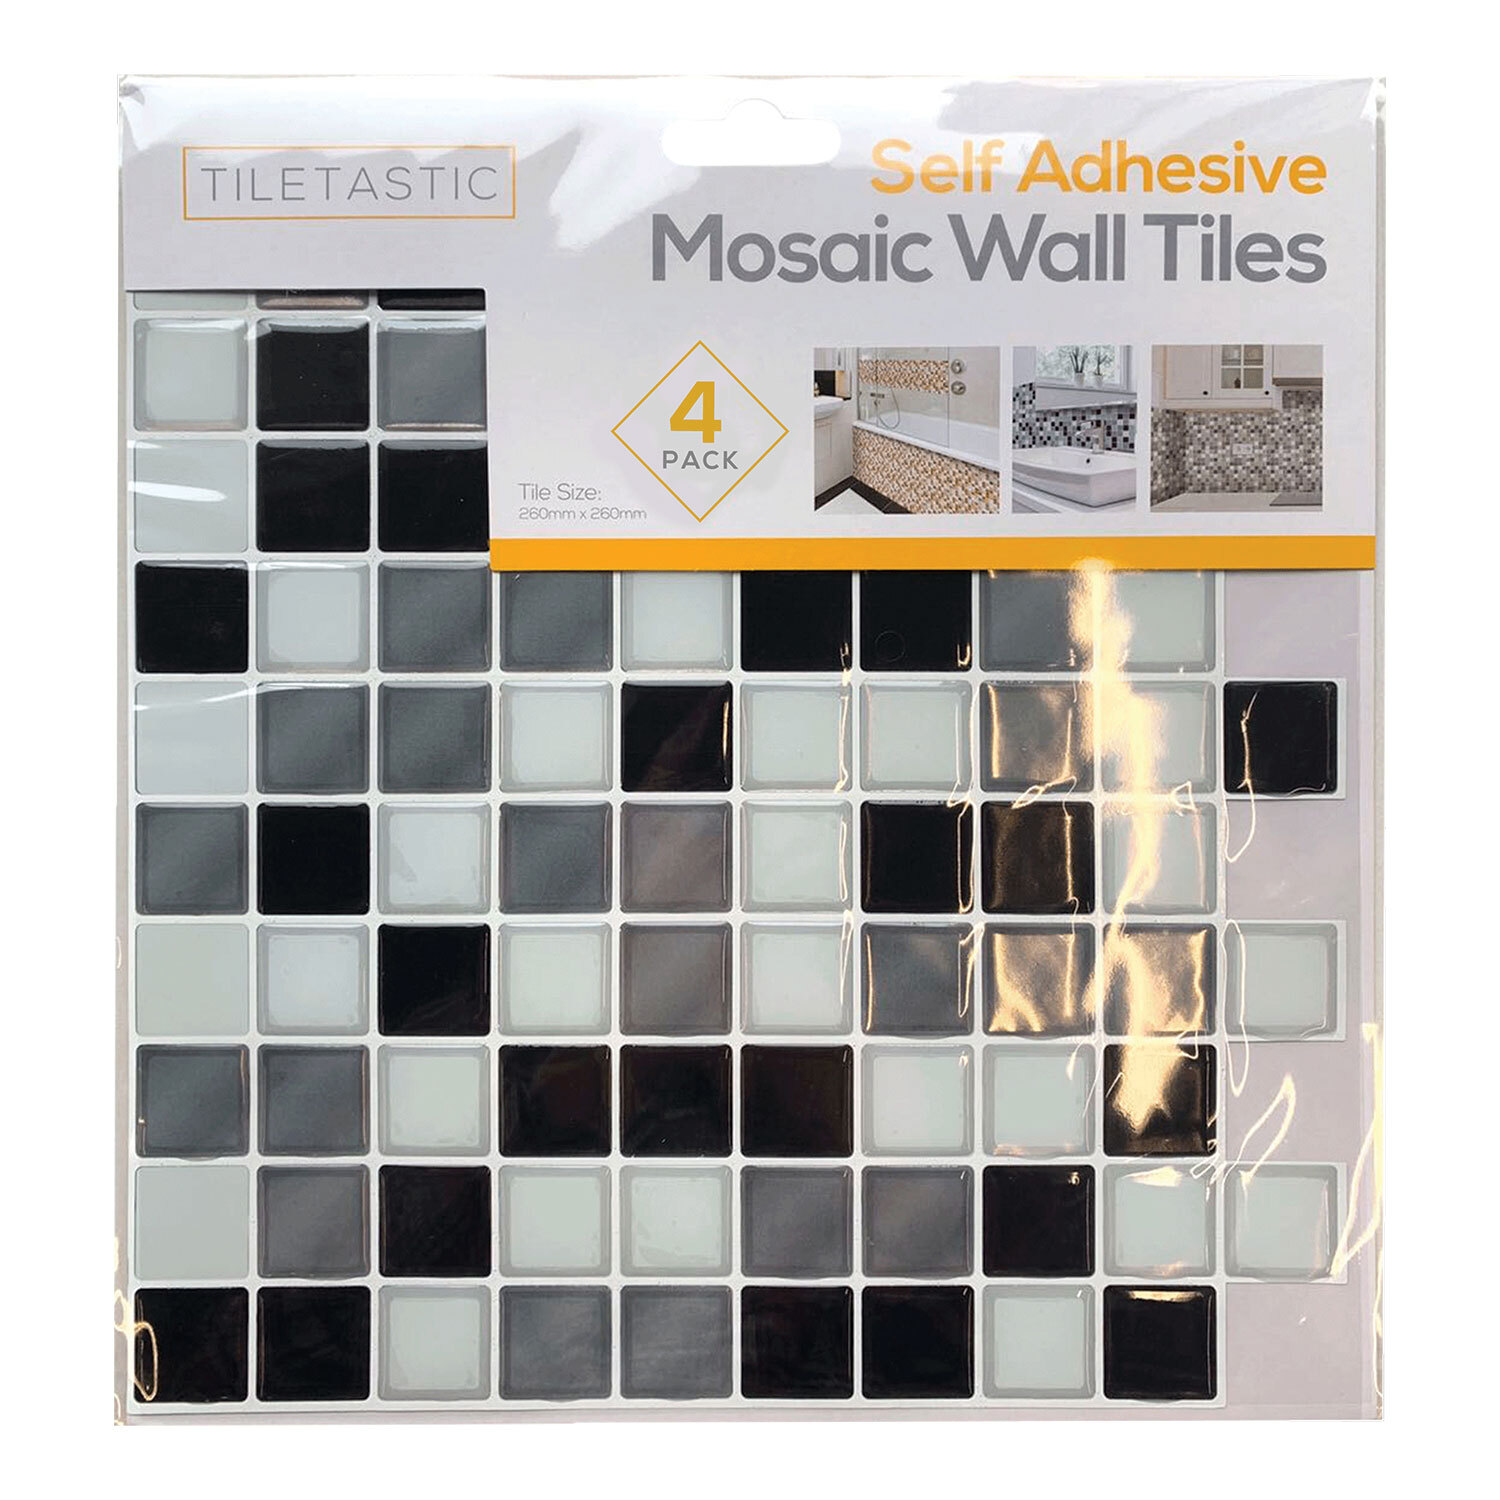 Adhesive Mosaic Wall Tile - Black and White Image